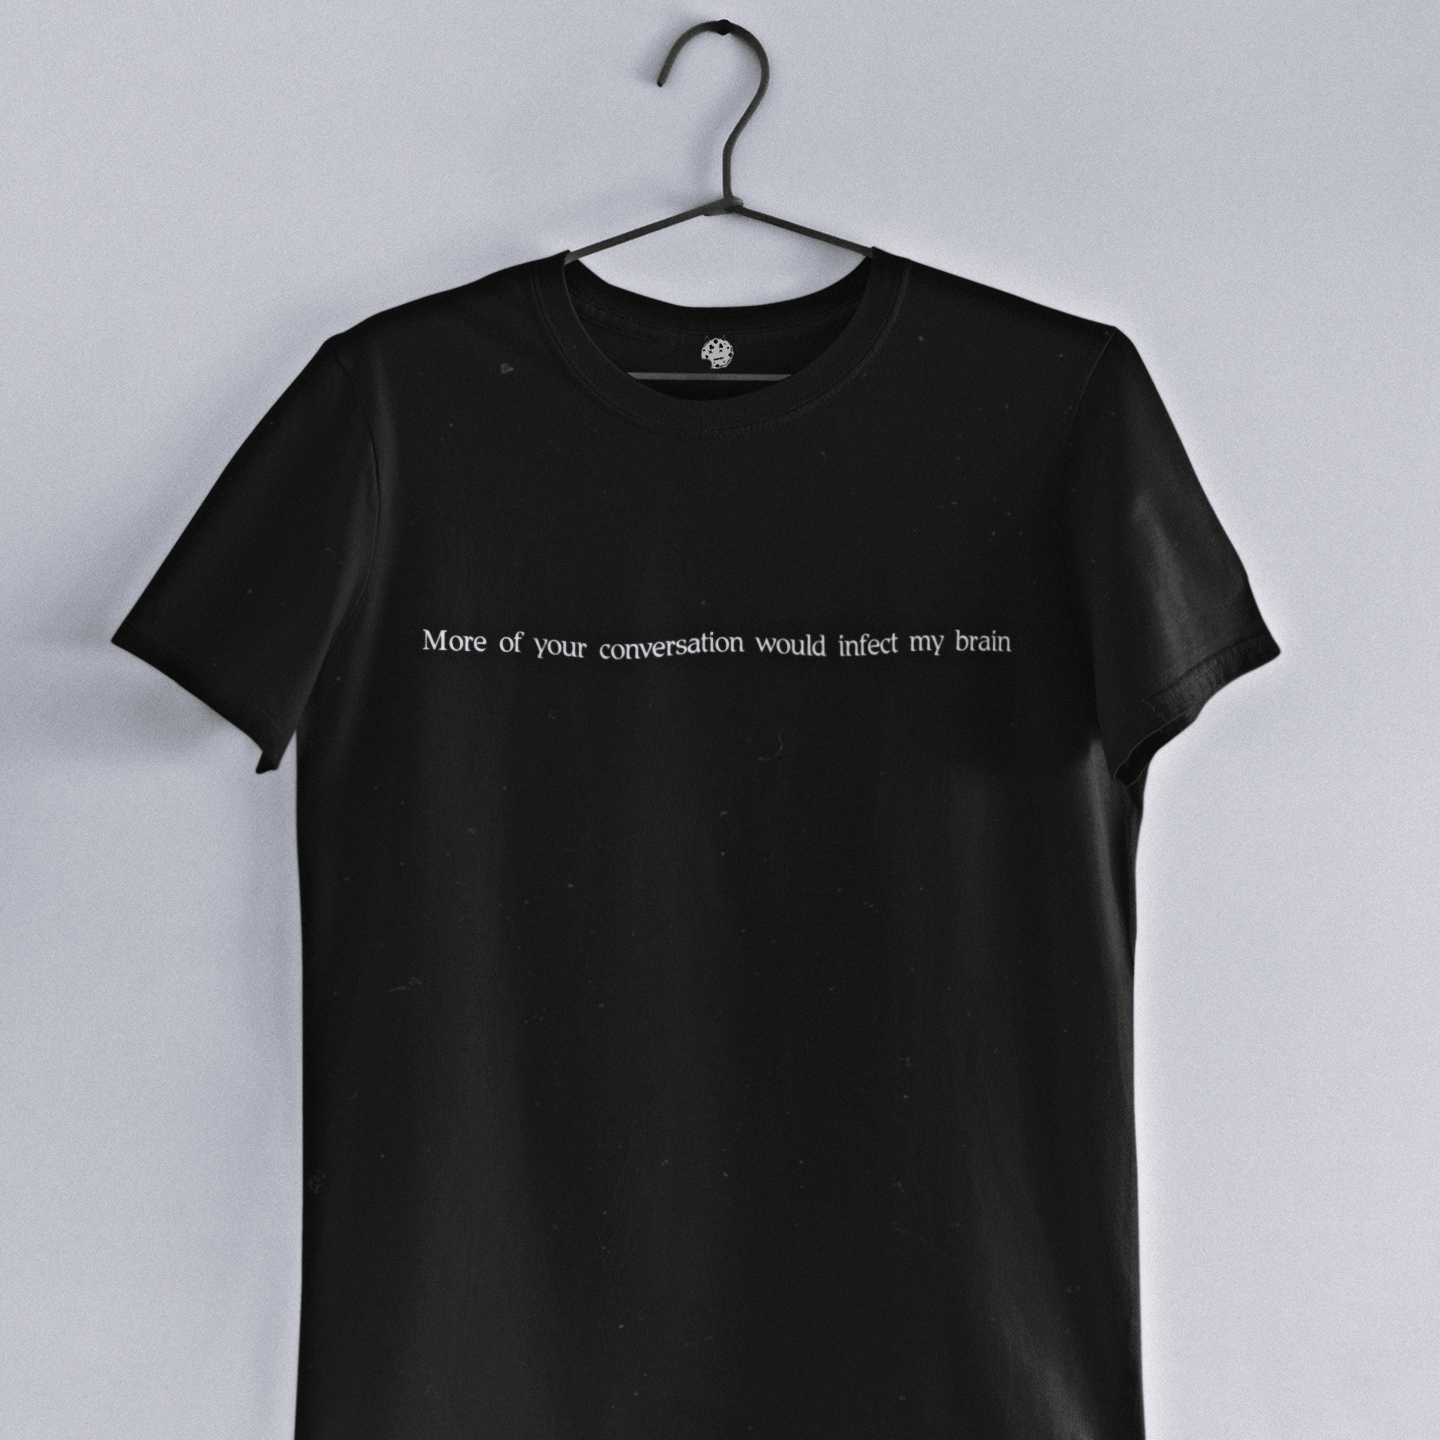 Coriolanus, Act II, Scene I Shakespearean insult on black hanging t-shirt